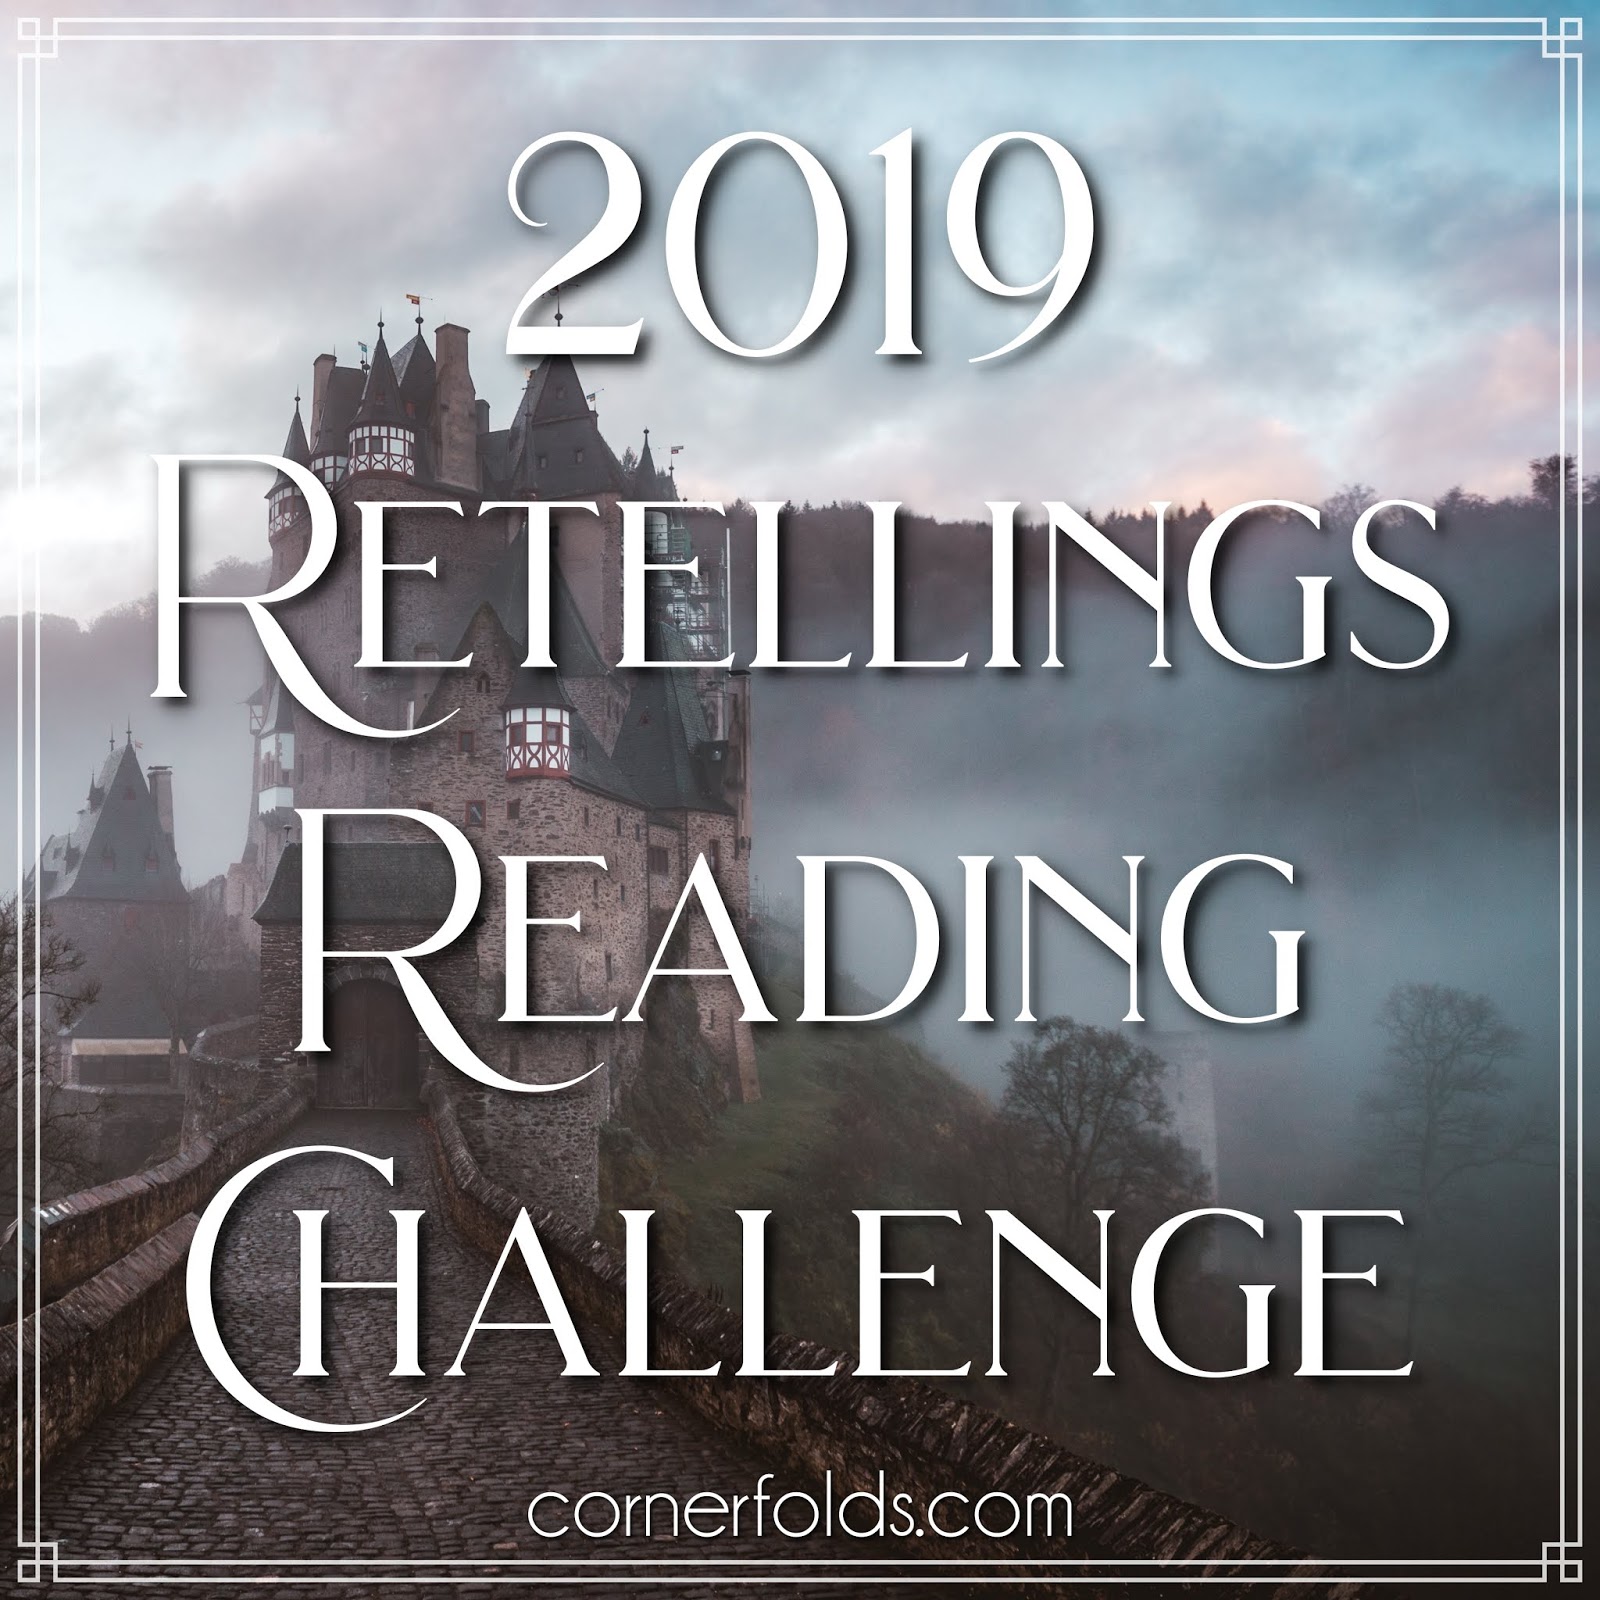 2019 Retellings Reading Challenge